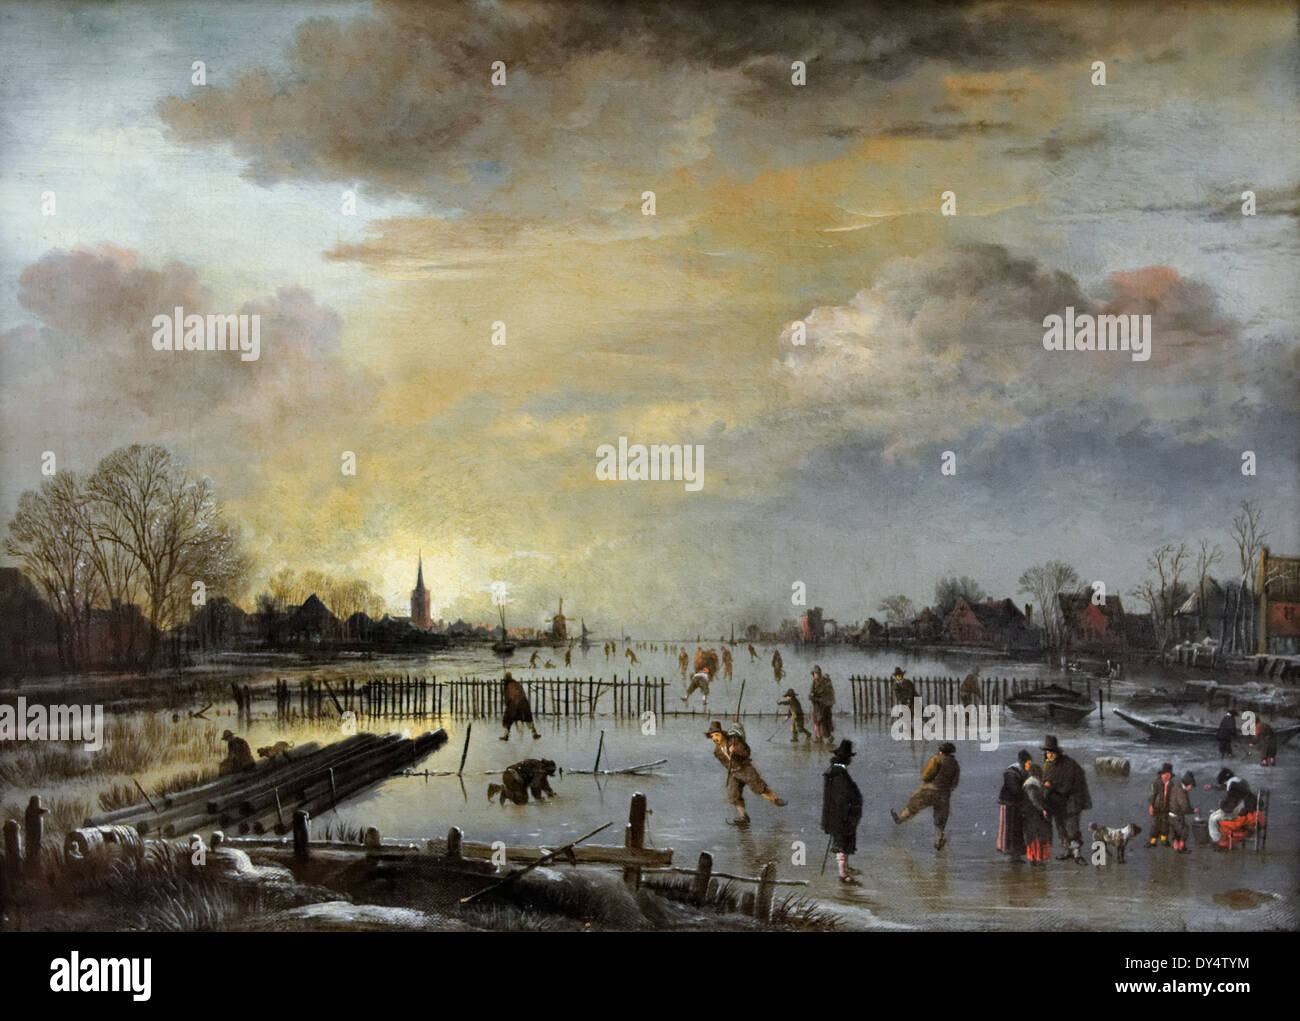 Aert van der Neer - Winter Landschaft mit Skater - 1660 - XVII th Jahrhundert - flämischen Schule - Gemäldegalerie - Berlin Stockfoto